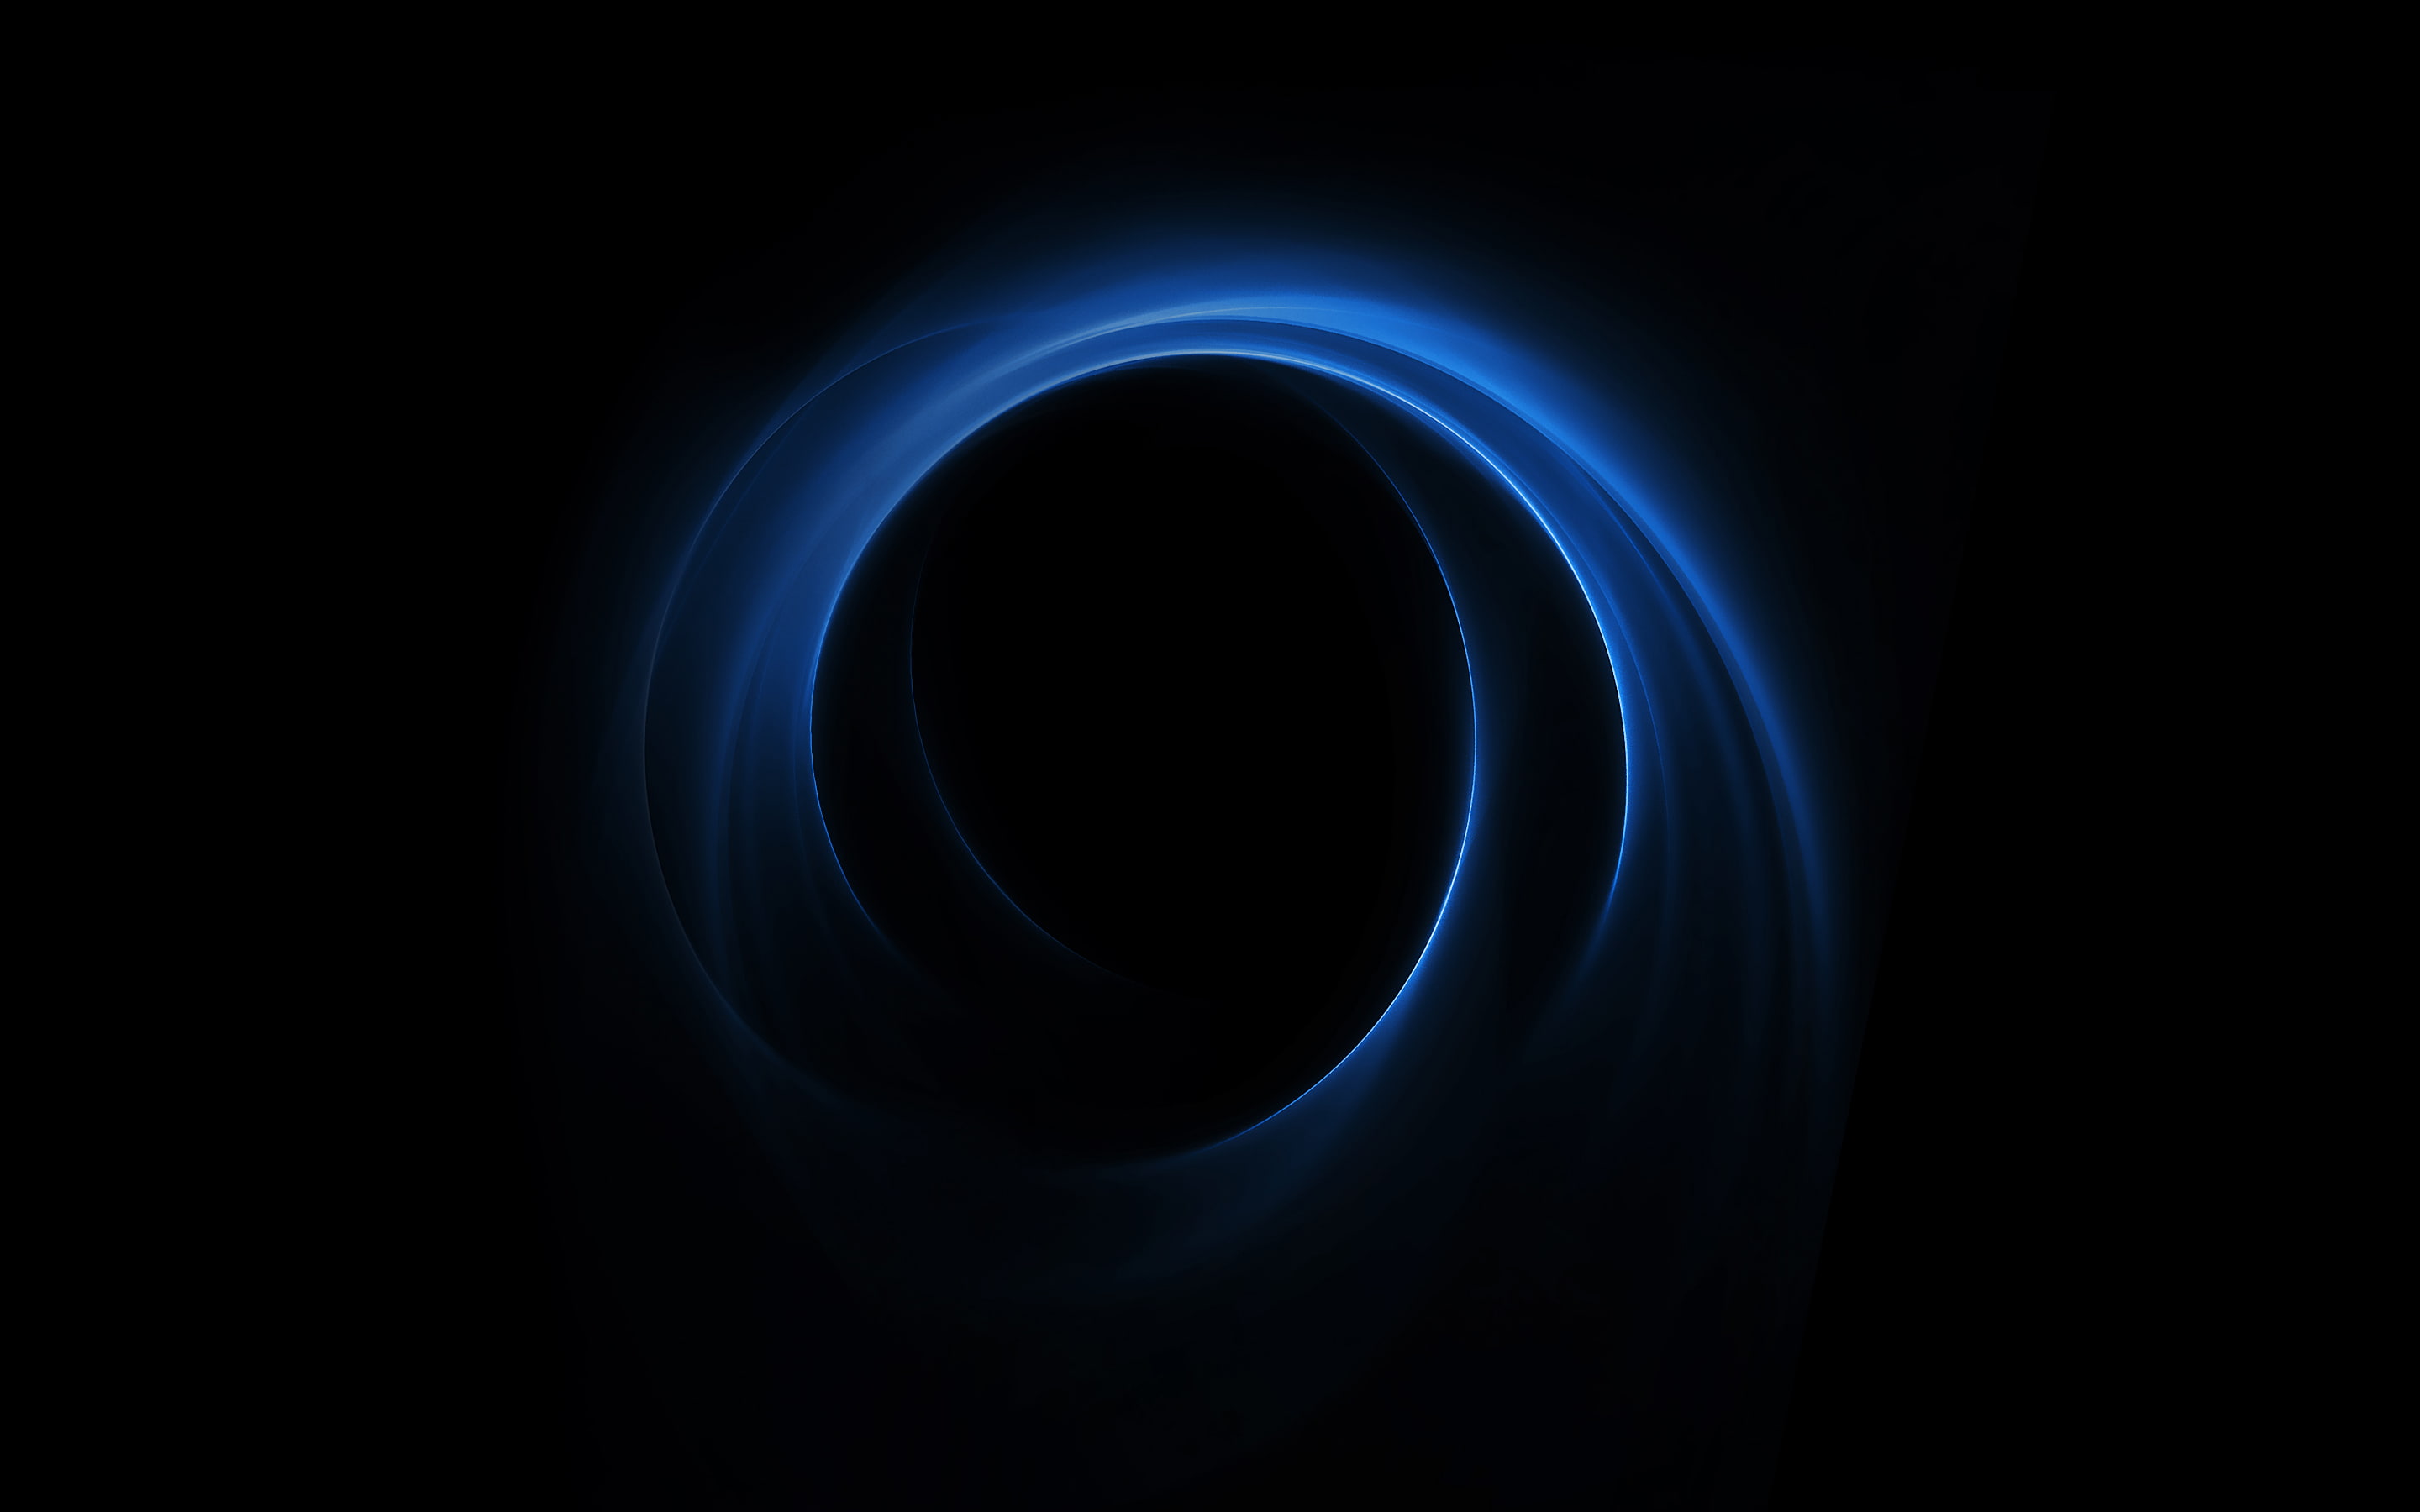 Blue Spiral Huawei Honor V8, black background, shape, light - natural phenomenon